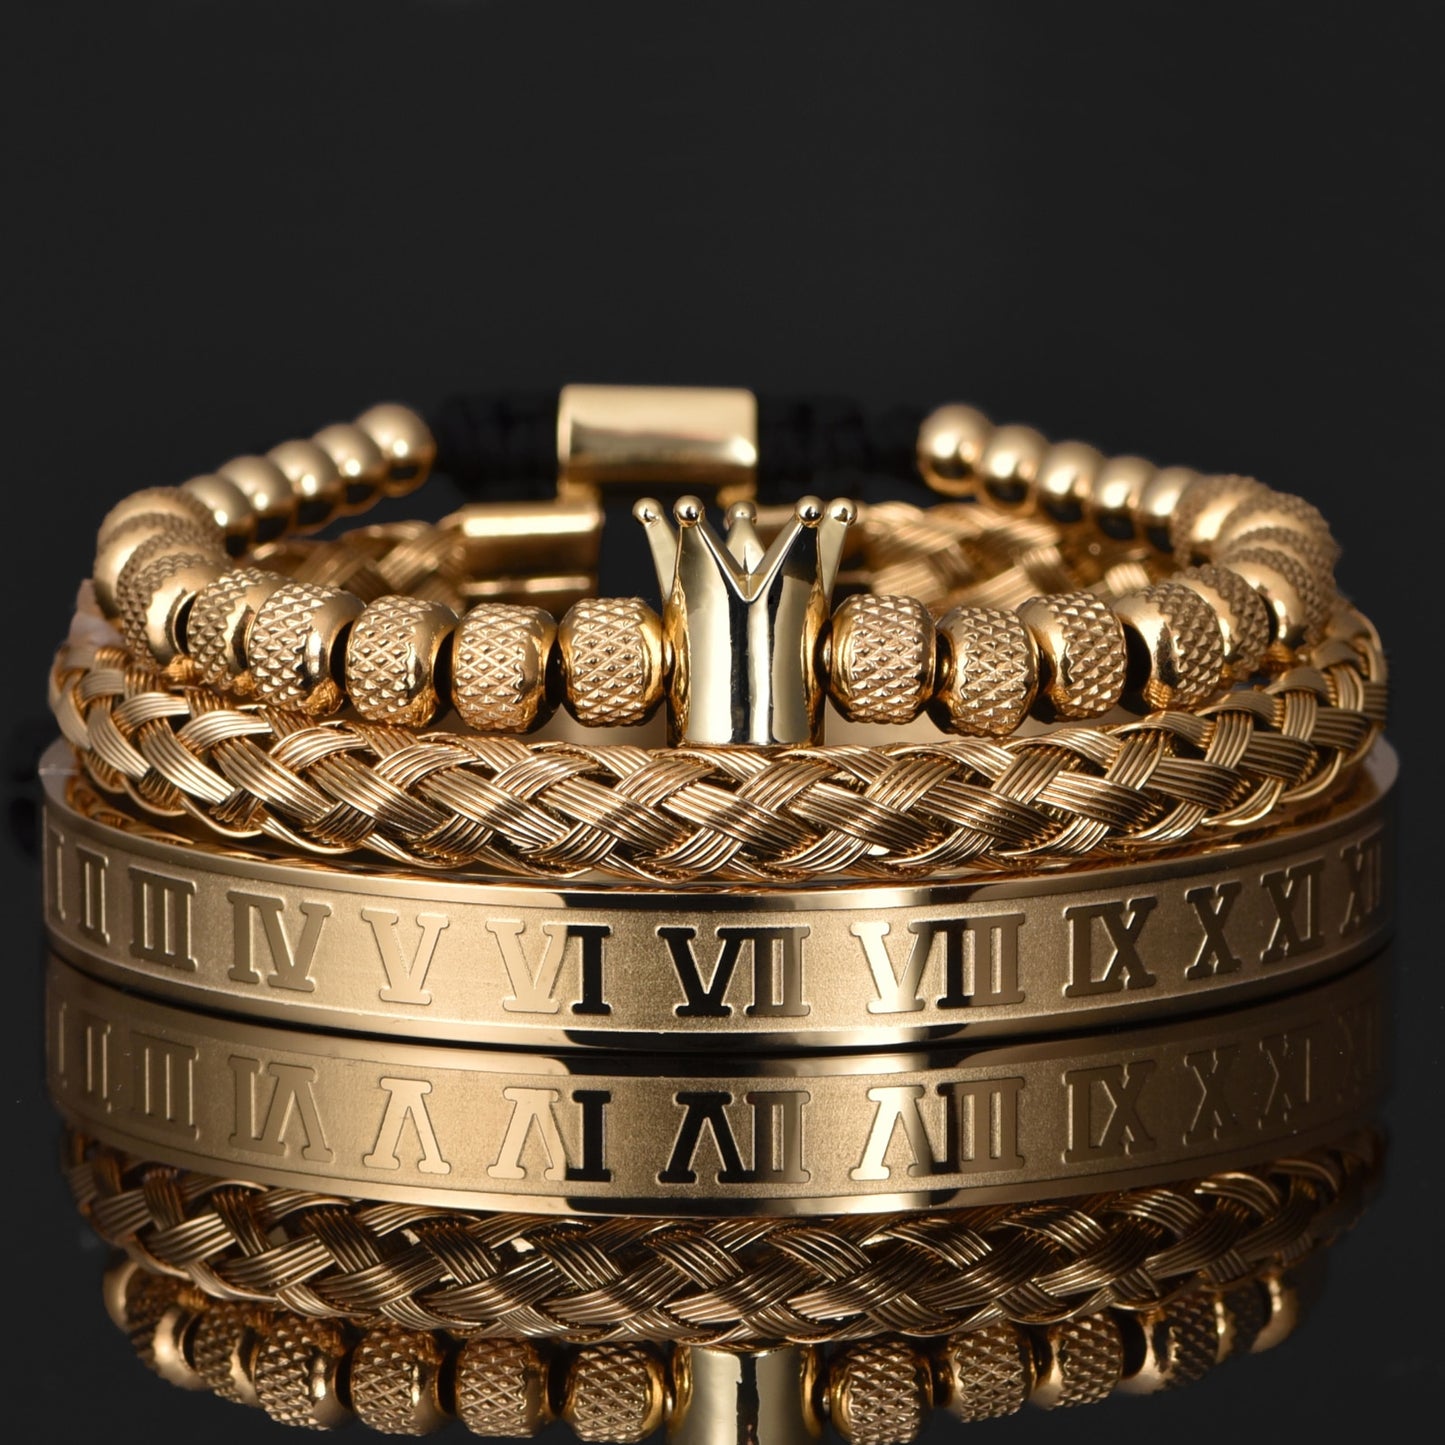 Roman Royal Crown Adjustable Stainless Steel Bracelets - All three